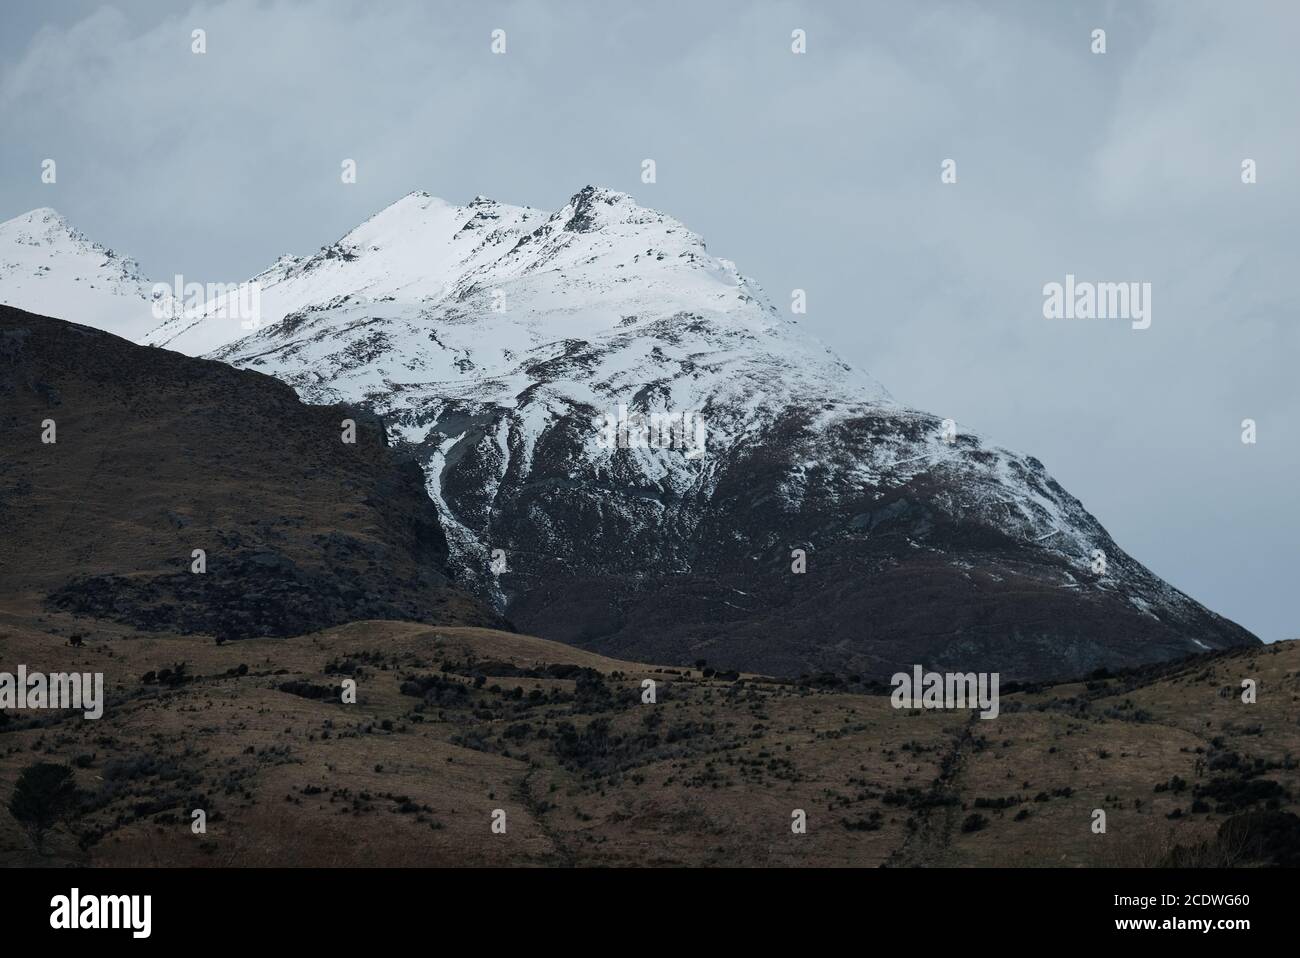 Snowy winter mountain at Glenorchy Stock Photo